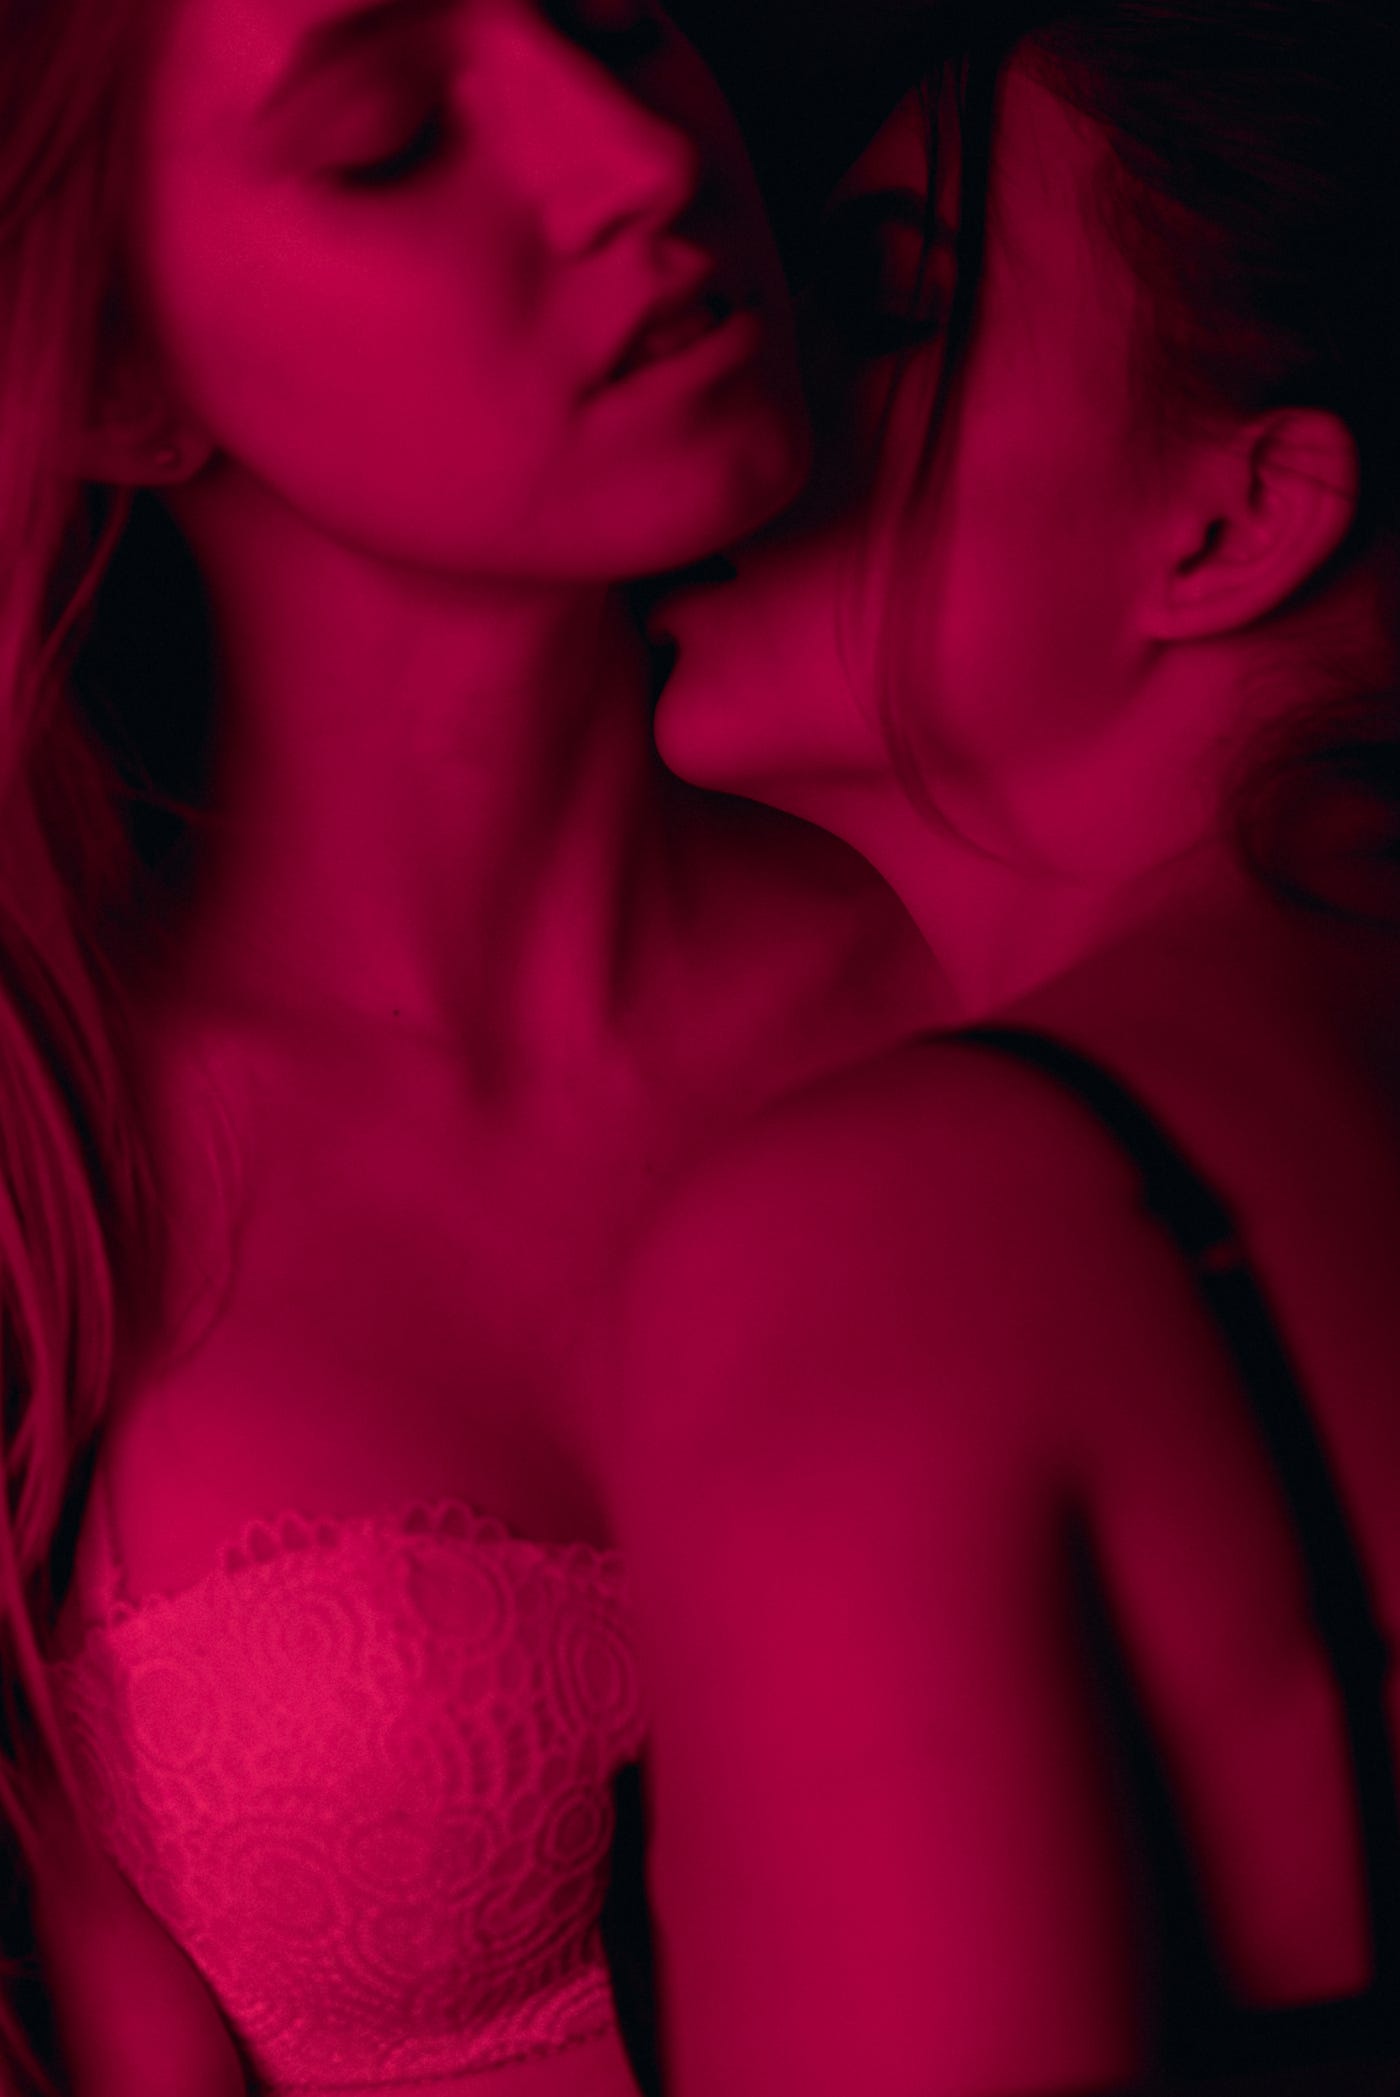 Erotic Stories — FF, MM and Beyond by Hana Lang Hana Lang Writes Medium pic